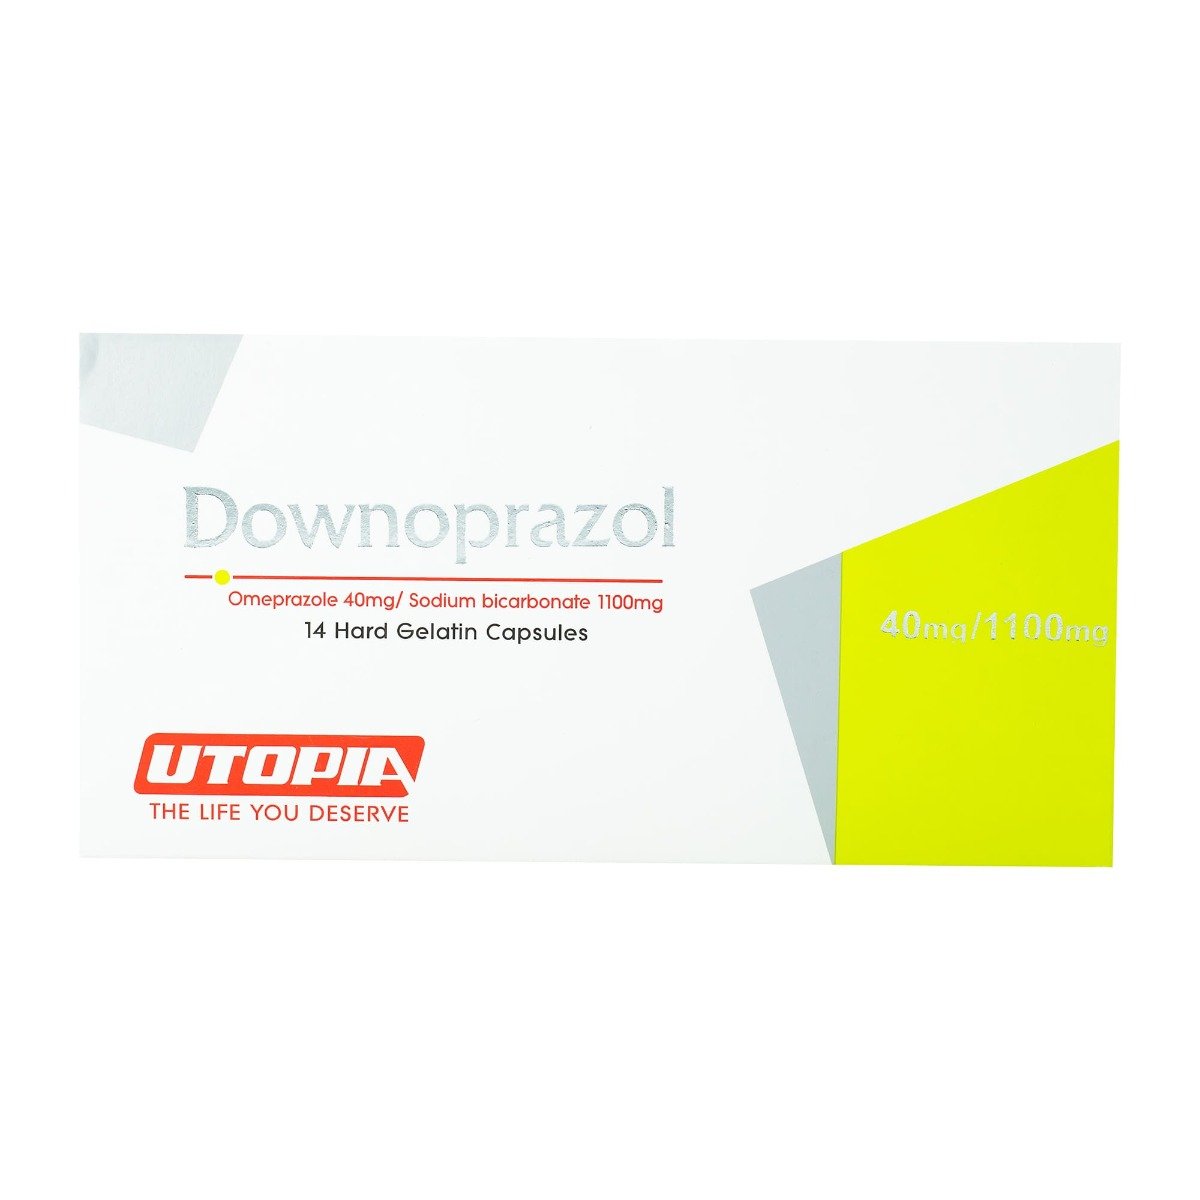 Downoprazol 40 mg-1100 mg - 14 Capsules - Bloom Pharmacy